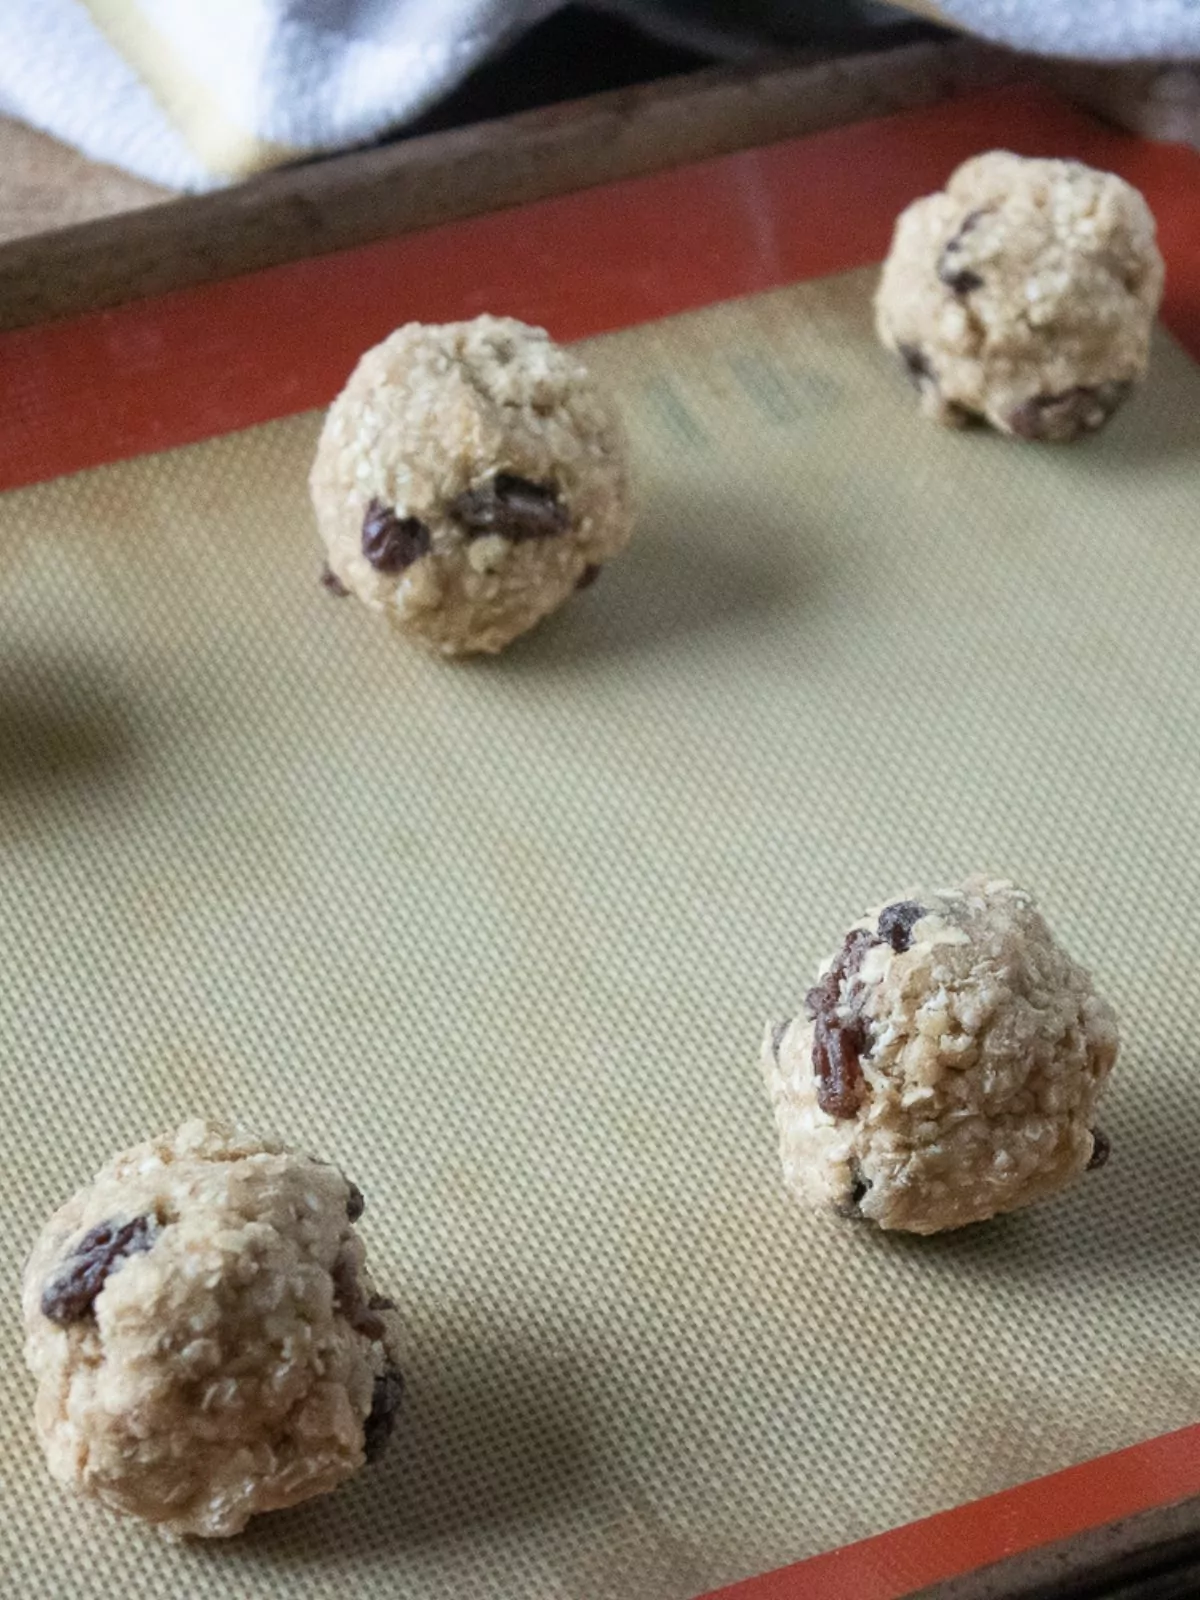 oatmeal raisin cookie dough balls on baking tray.